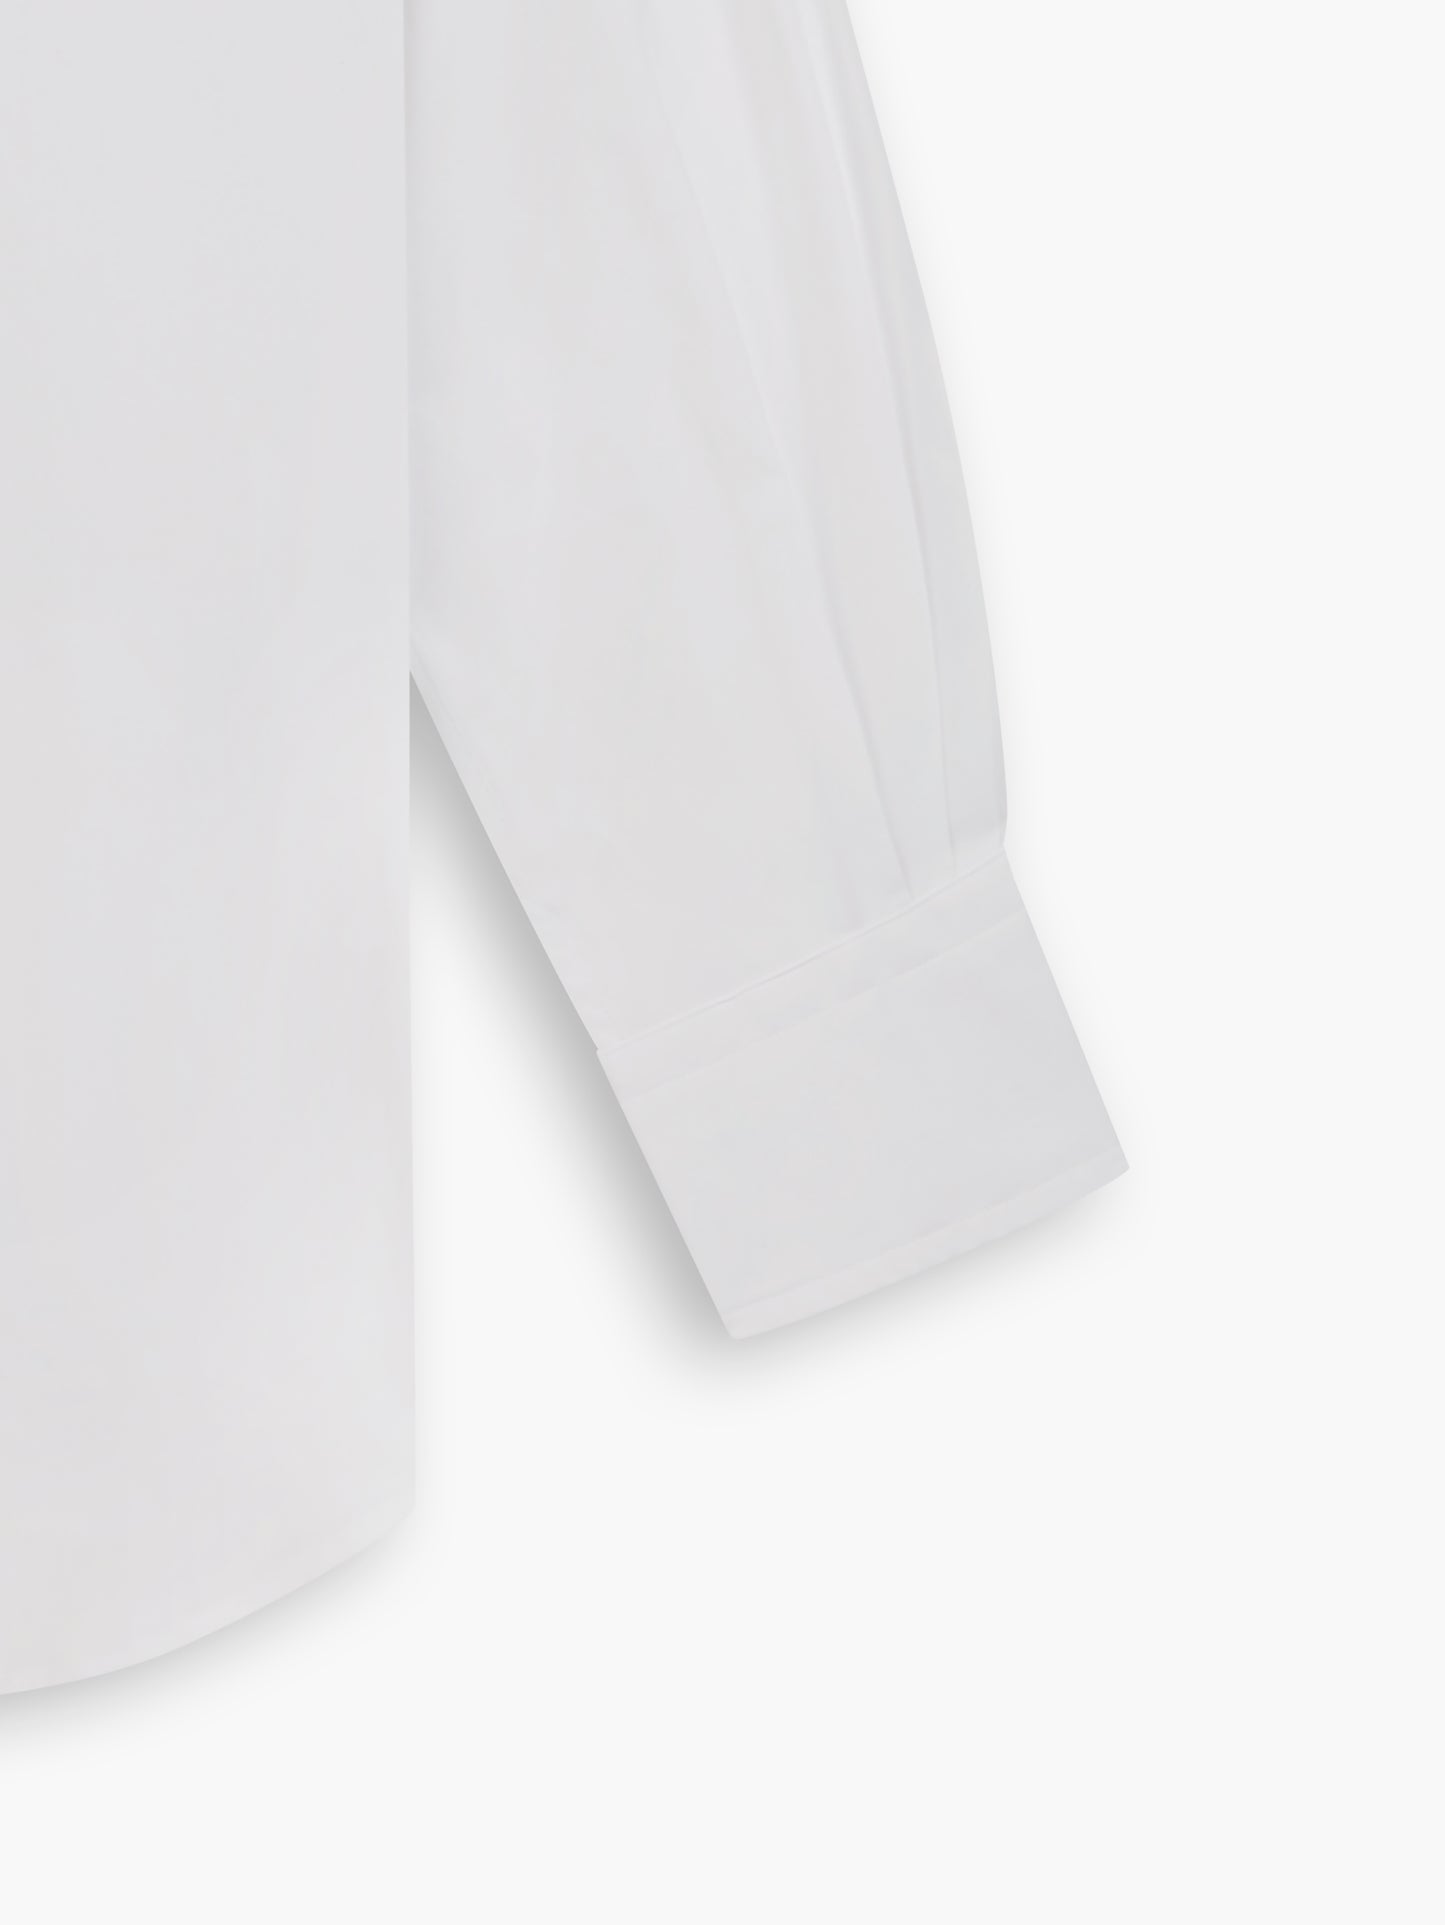 White Poplin Stretch Fitted Single Cuff Cutaway Collar Shirt